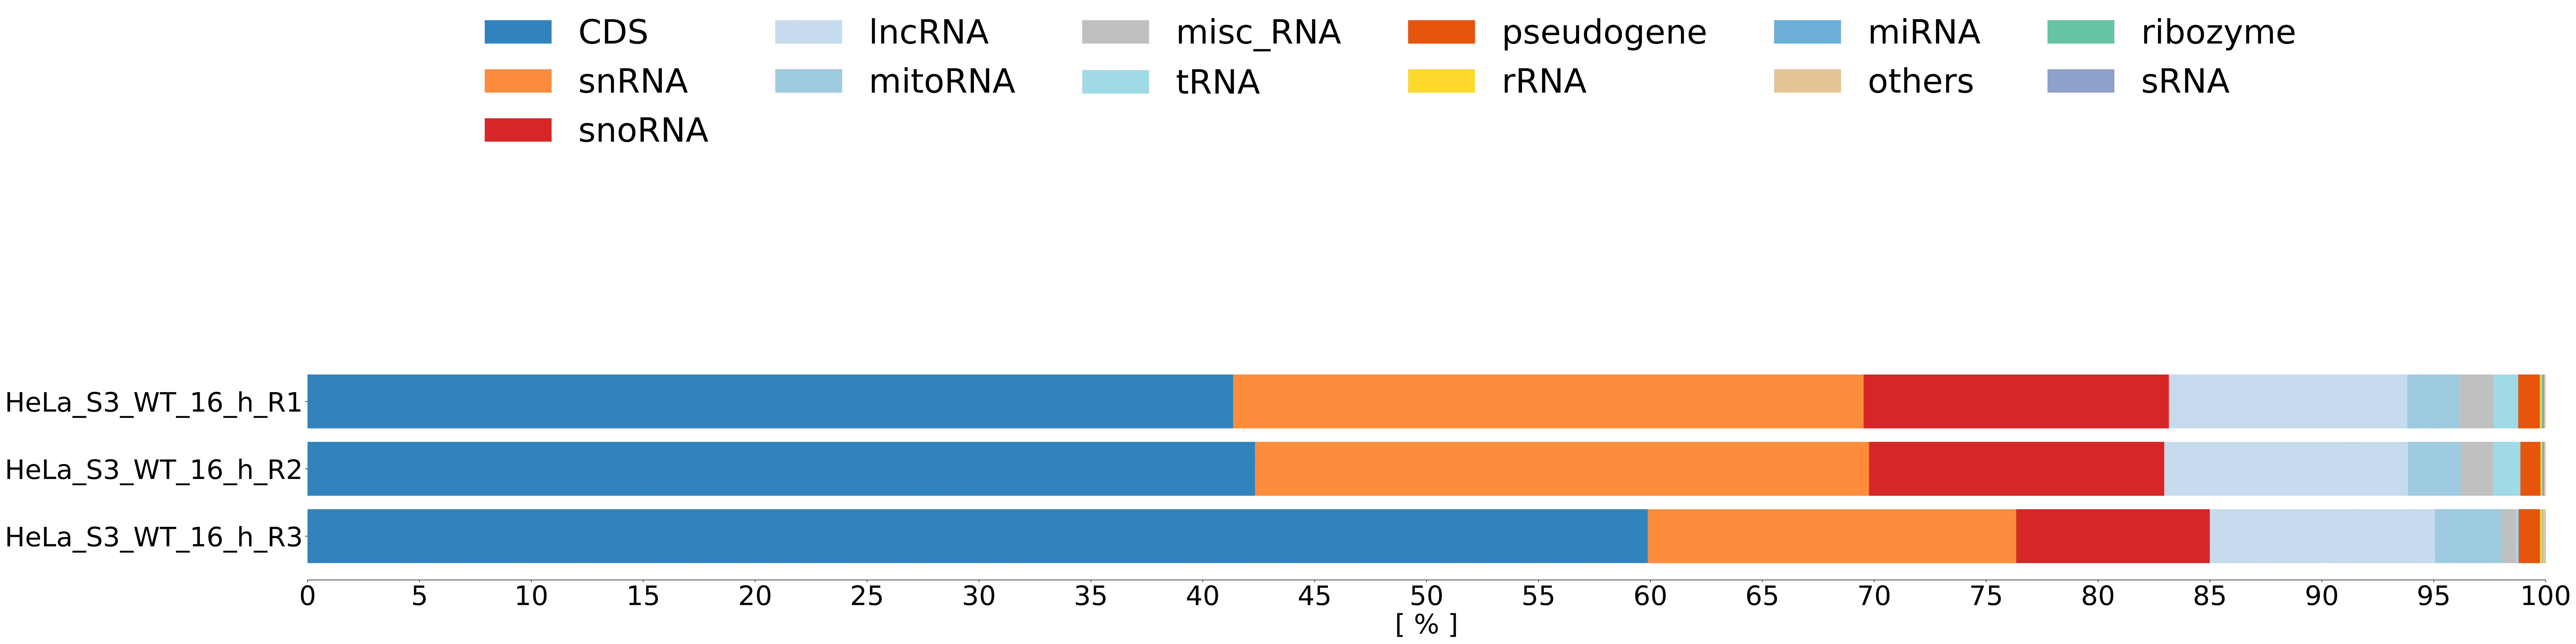 RNA_class_stats_combined_host